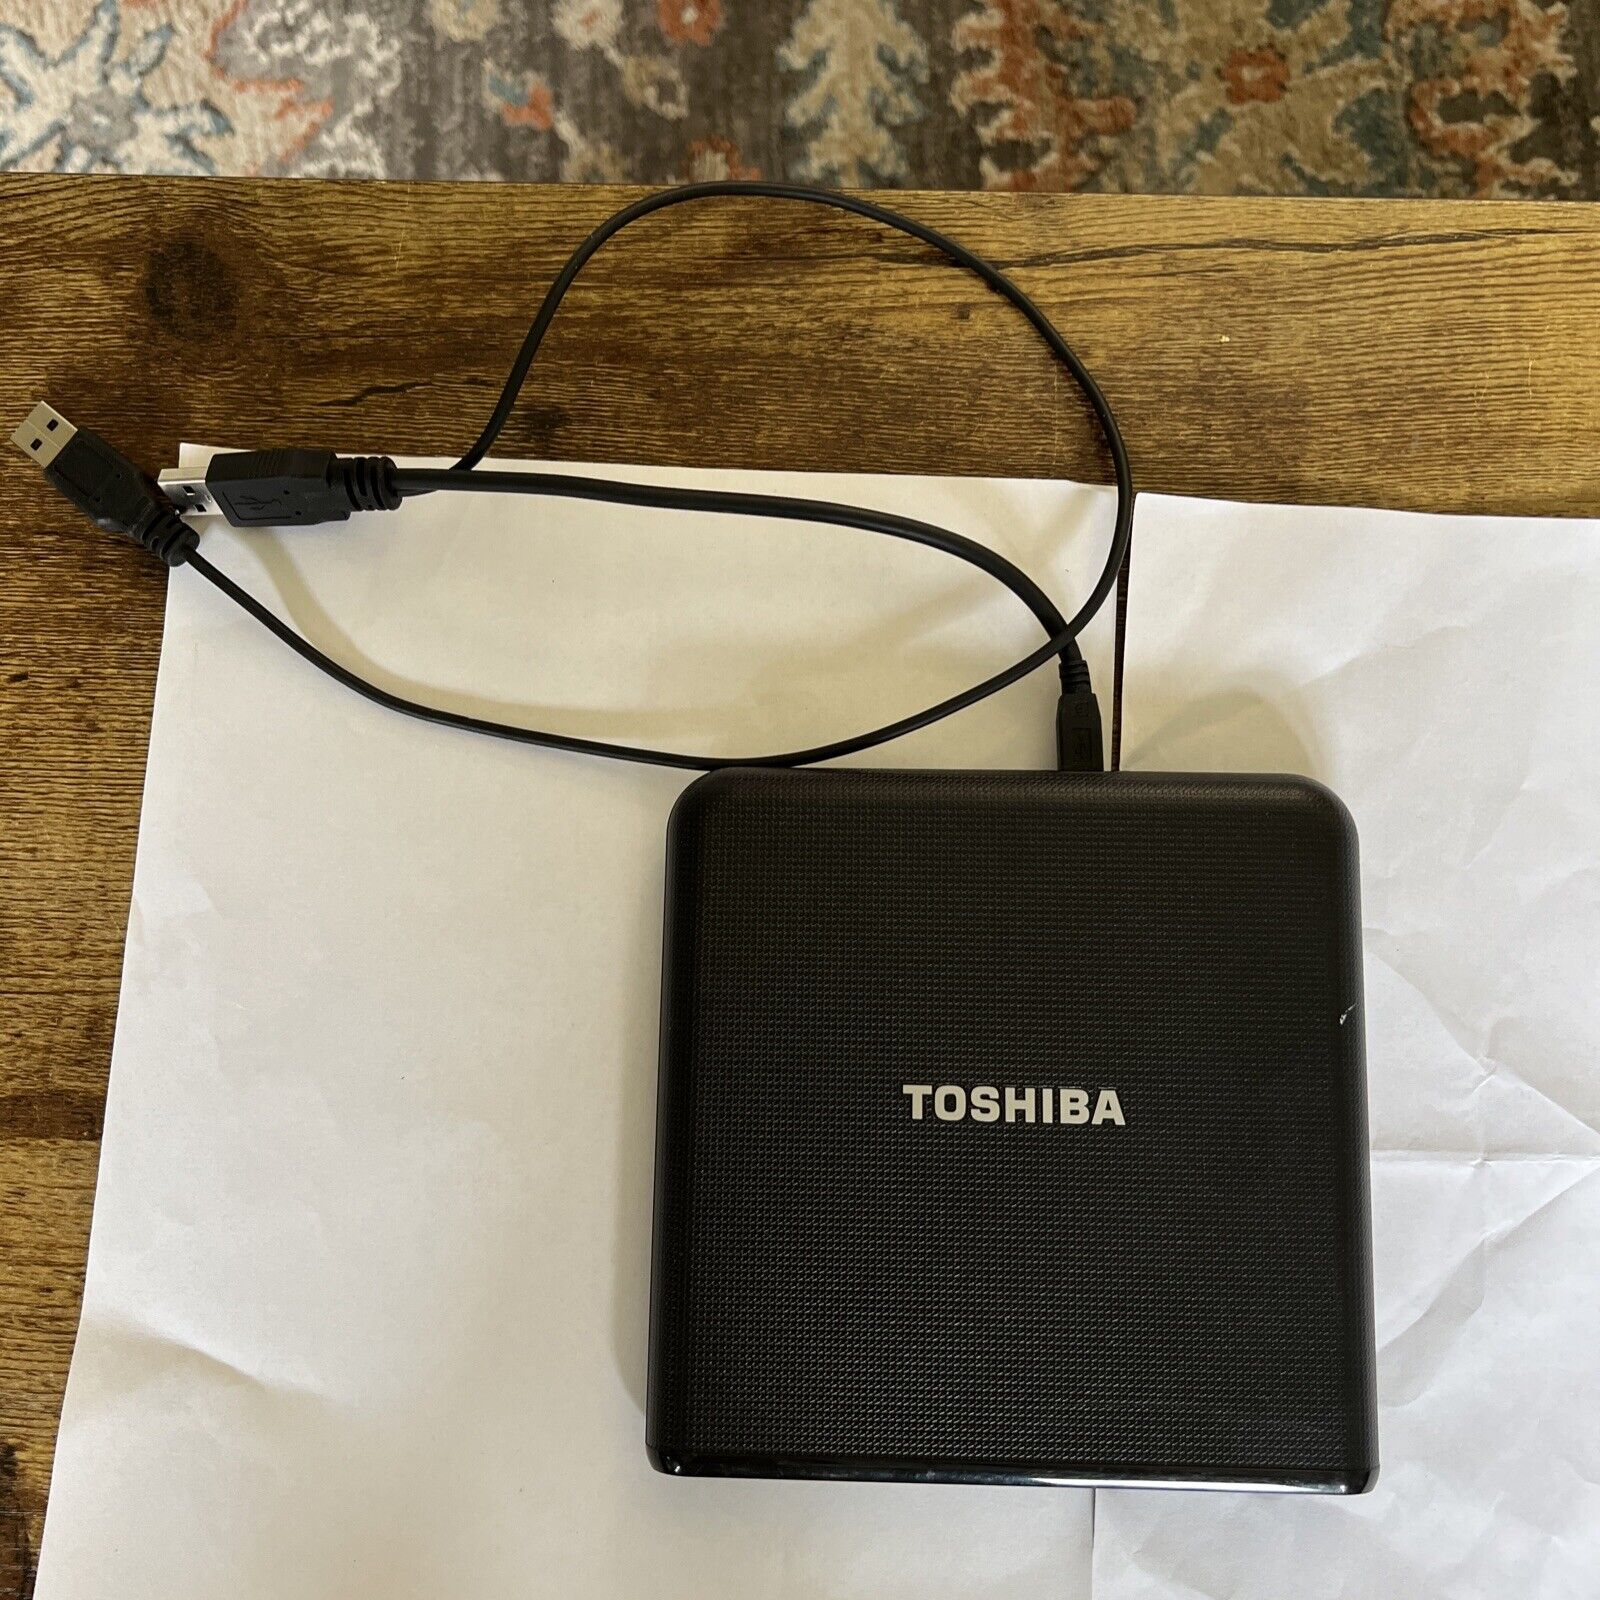 Toshiba Portable Super Multi Drive PA3834U-1DV2 USB DVD CD Drive Tested Working